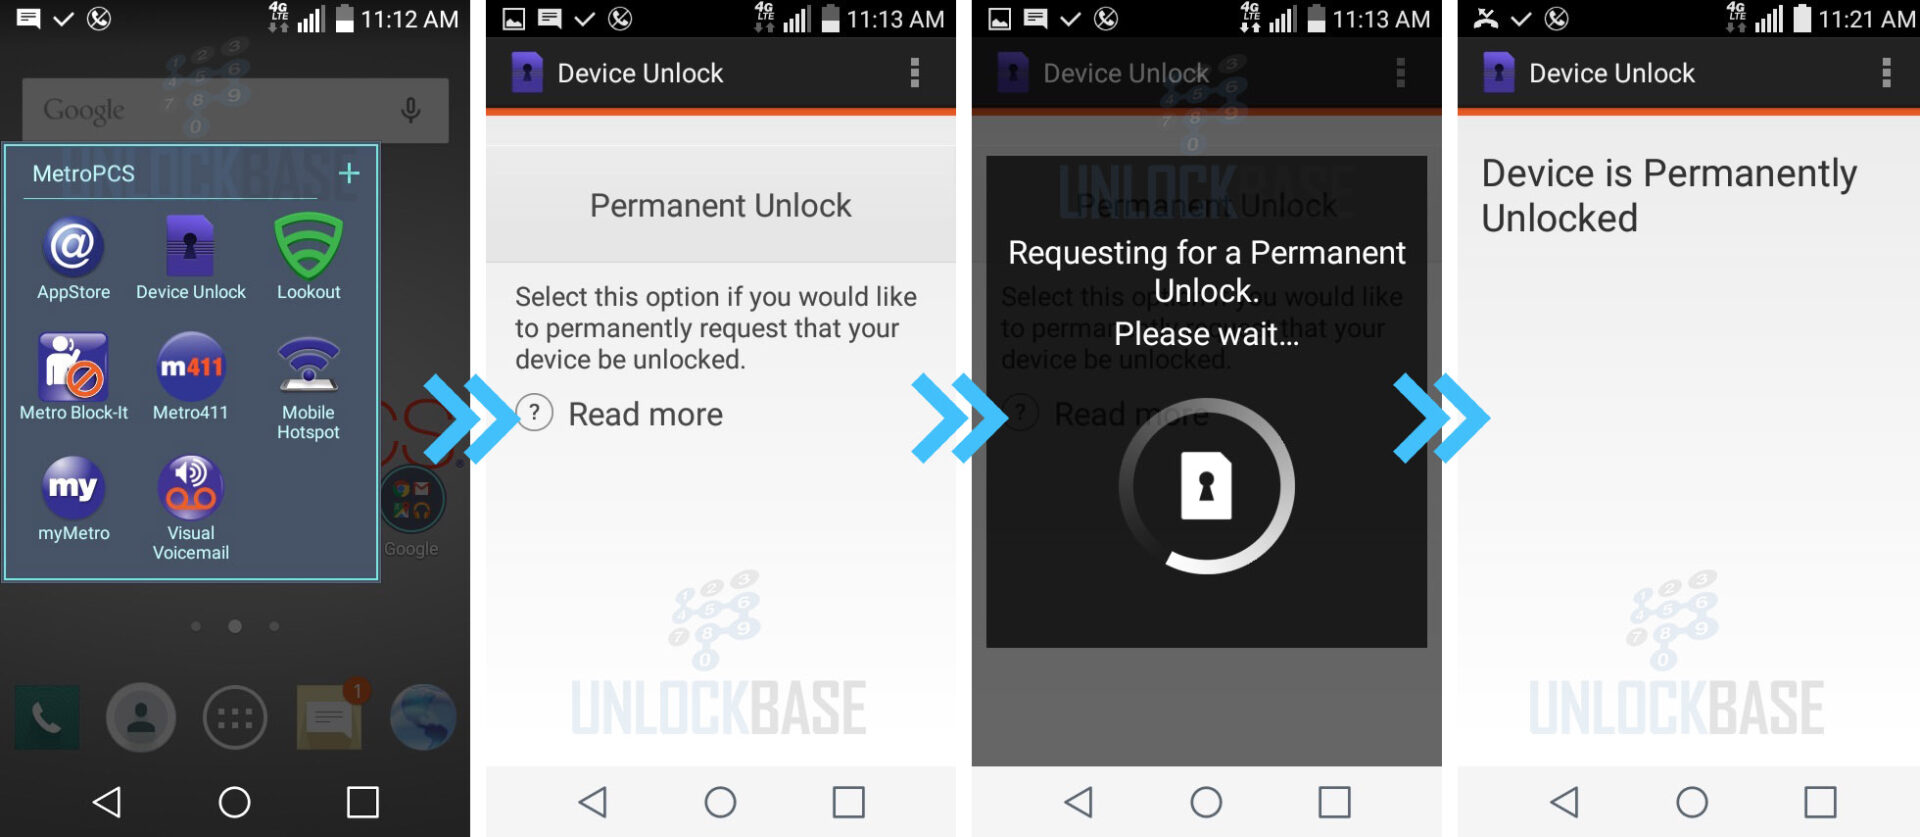 T-Mobile Device Unlock App Service INSTANT-Self Service!!! Official Metro PCS 